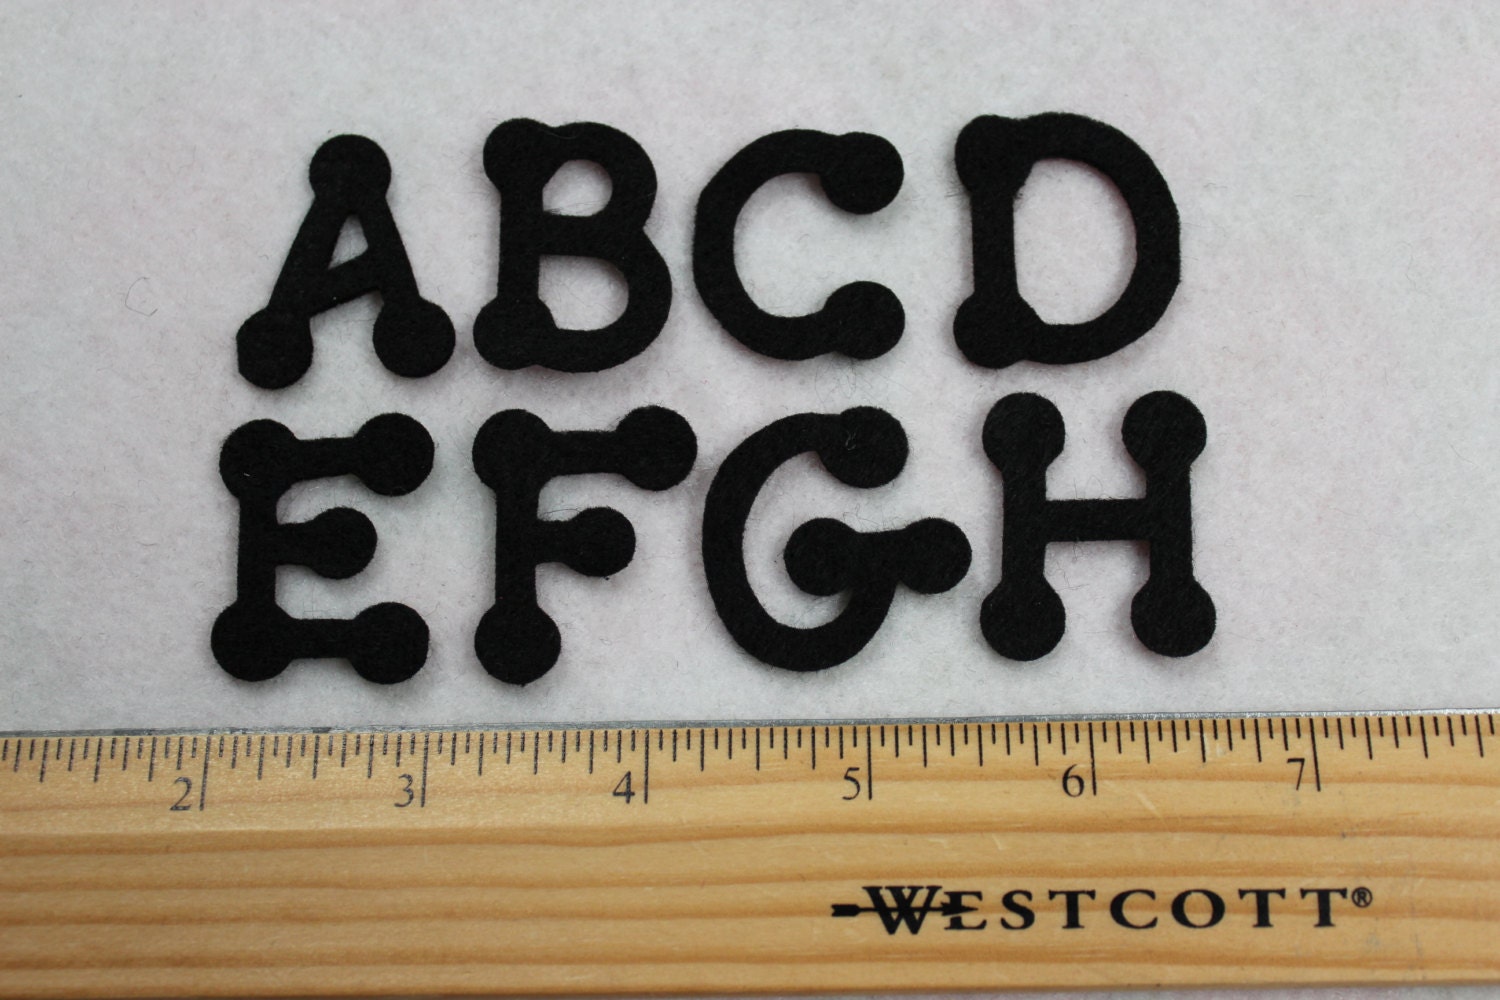 Felt Alphabet, A-Z, 26 Letters Patch Precut Craft Supply Upper